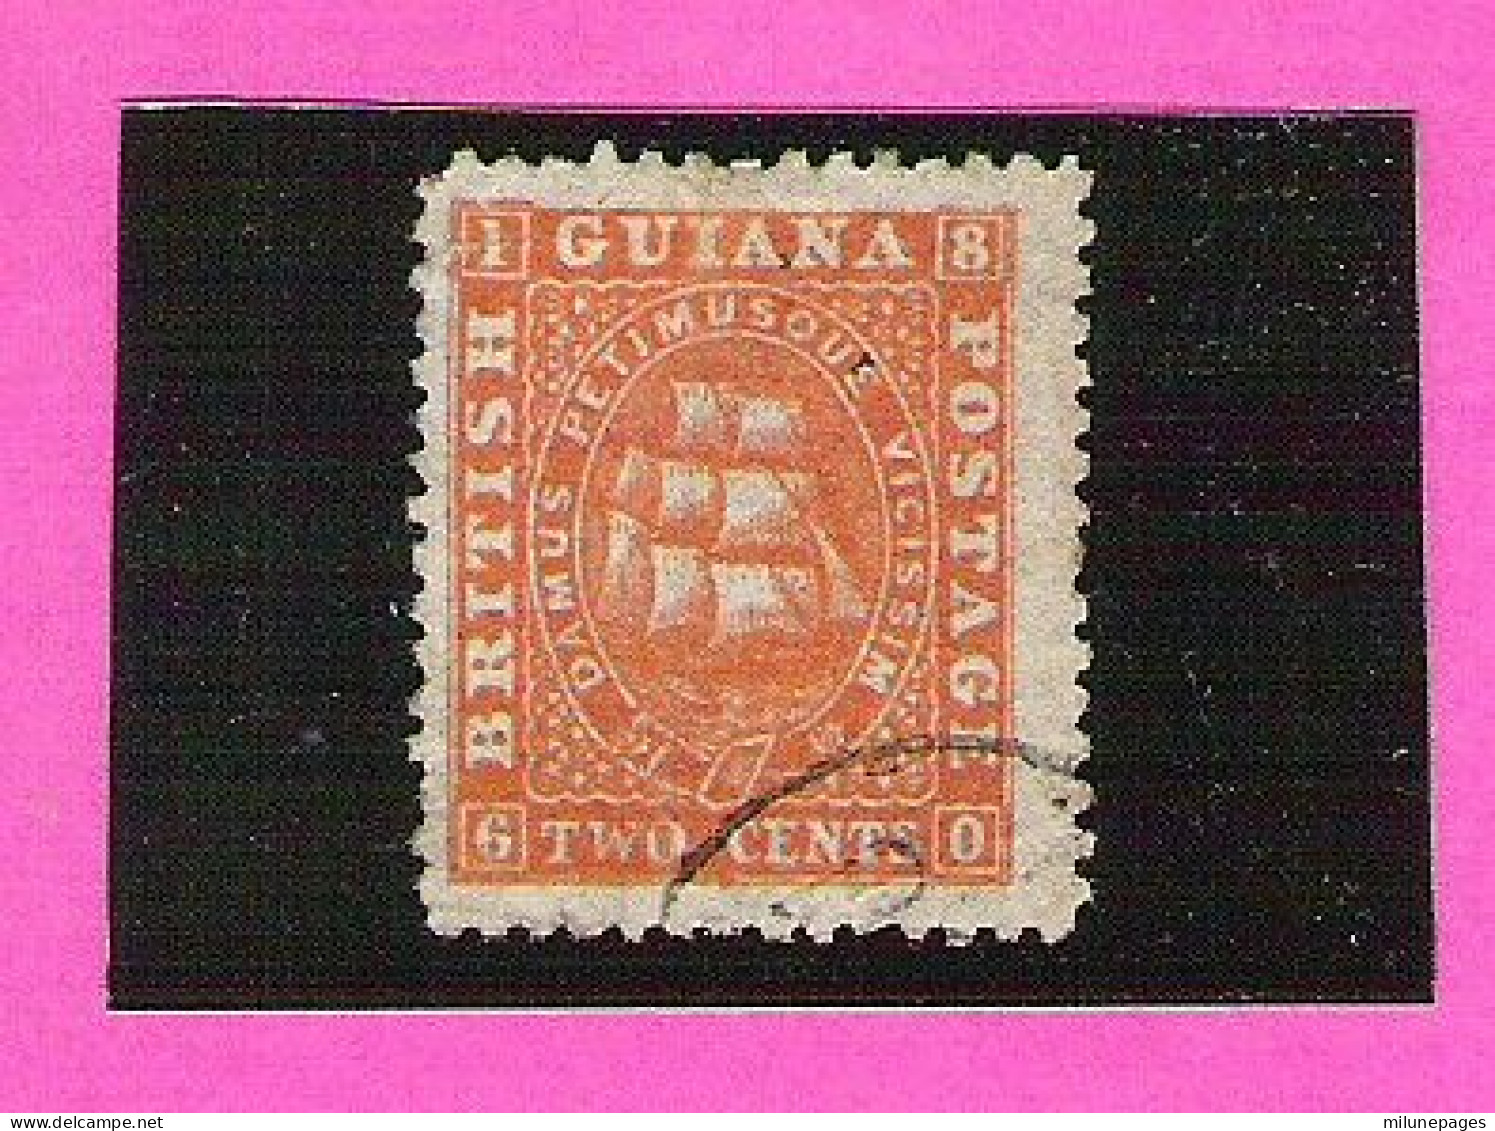 Guiana Guyane Britannique Armoiries Frégatte 2 Cent Orange Yvert 16 Canceled - British Guiana (...-1966)